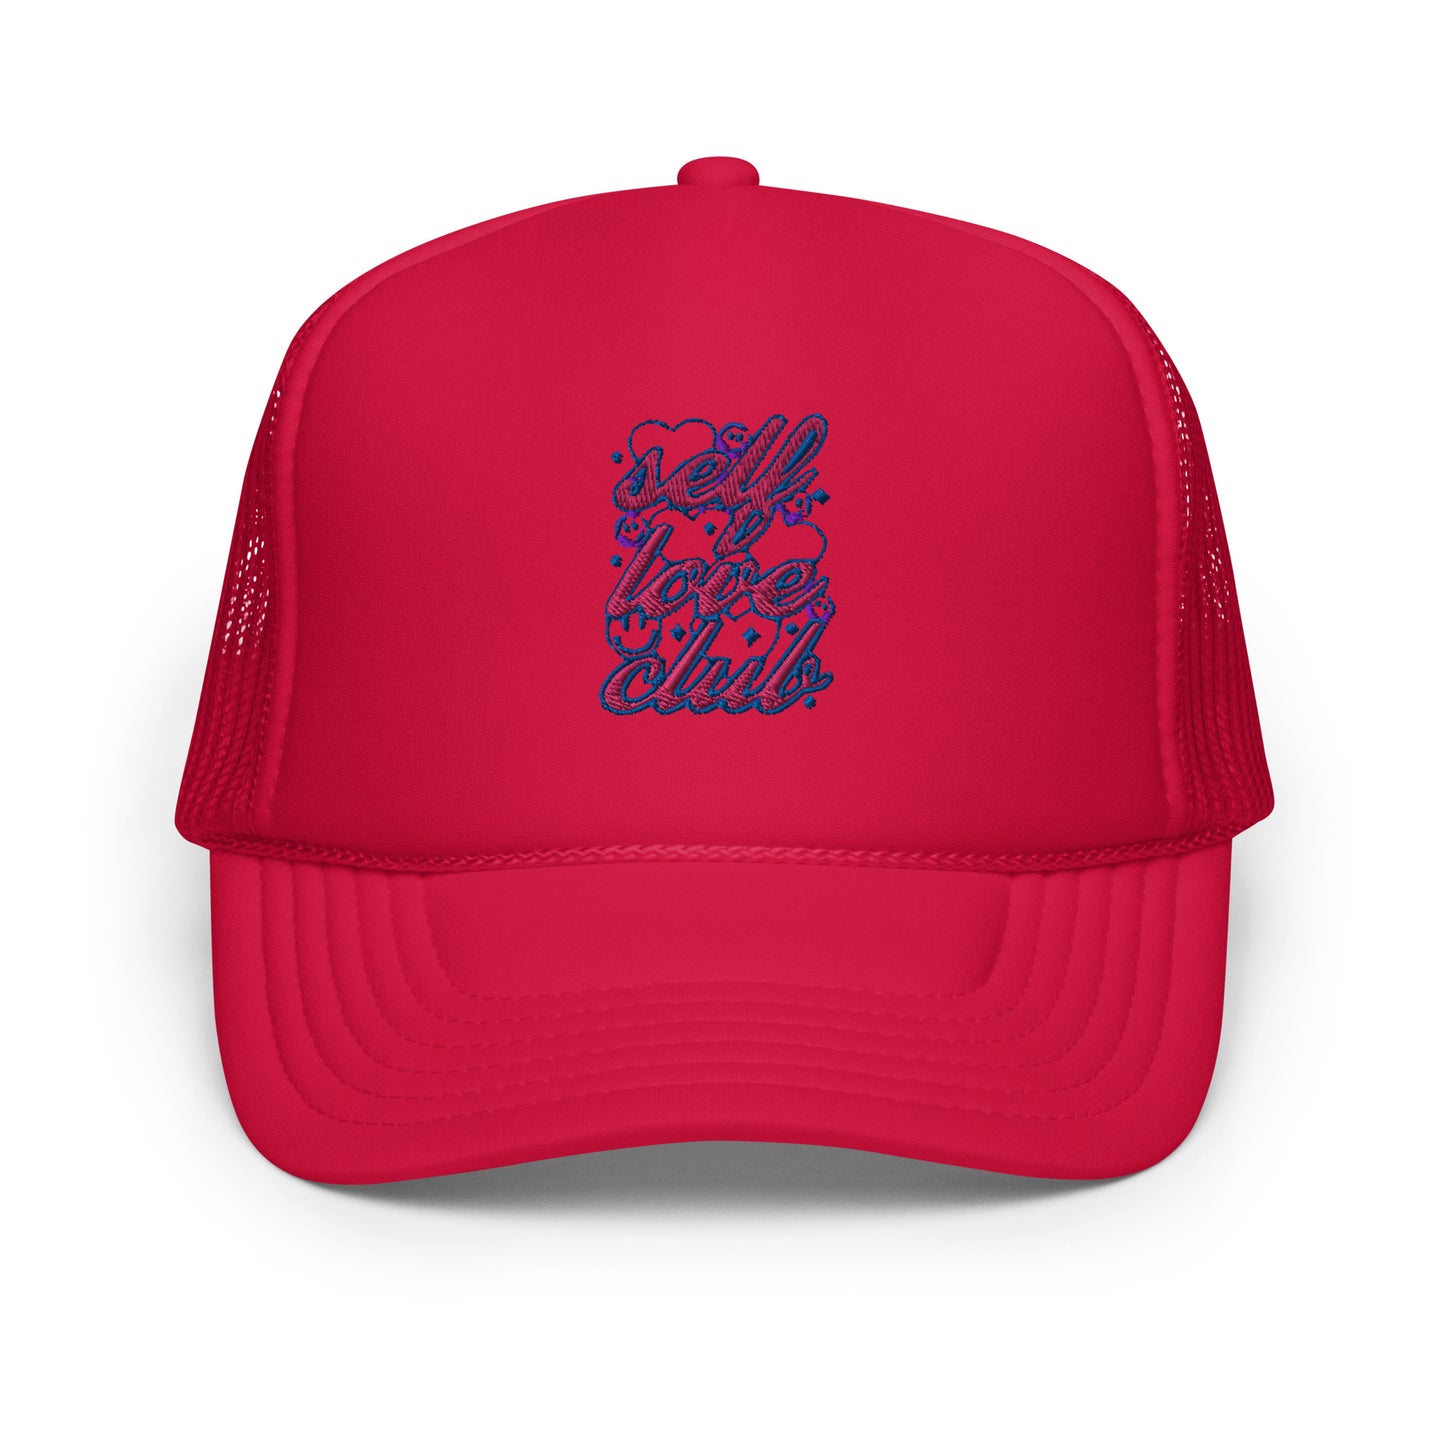 Self Love Club Foam trucker hat